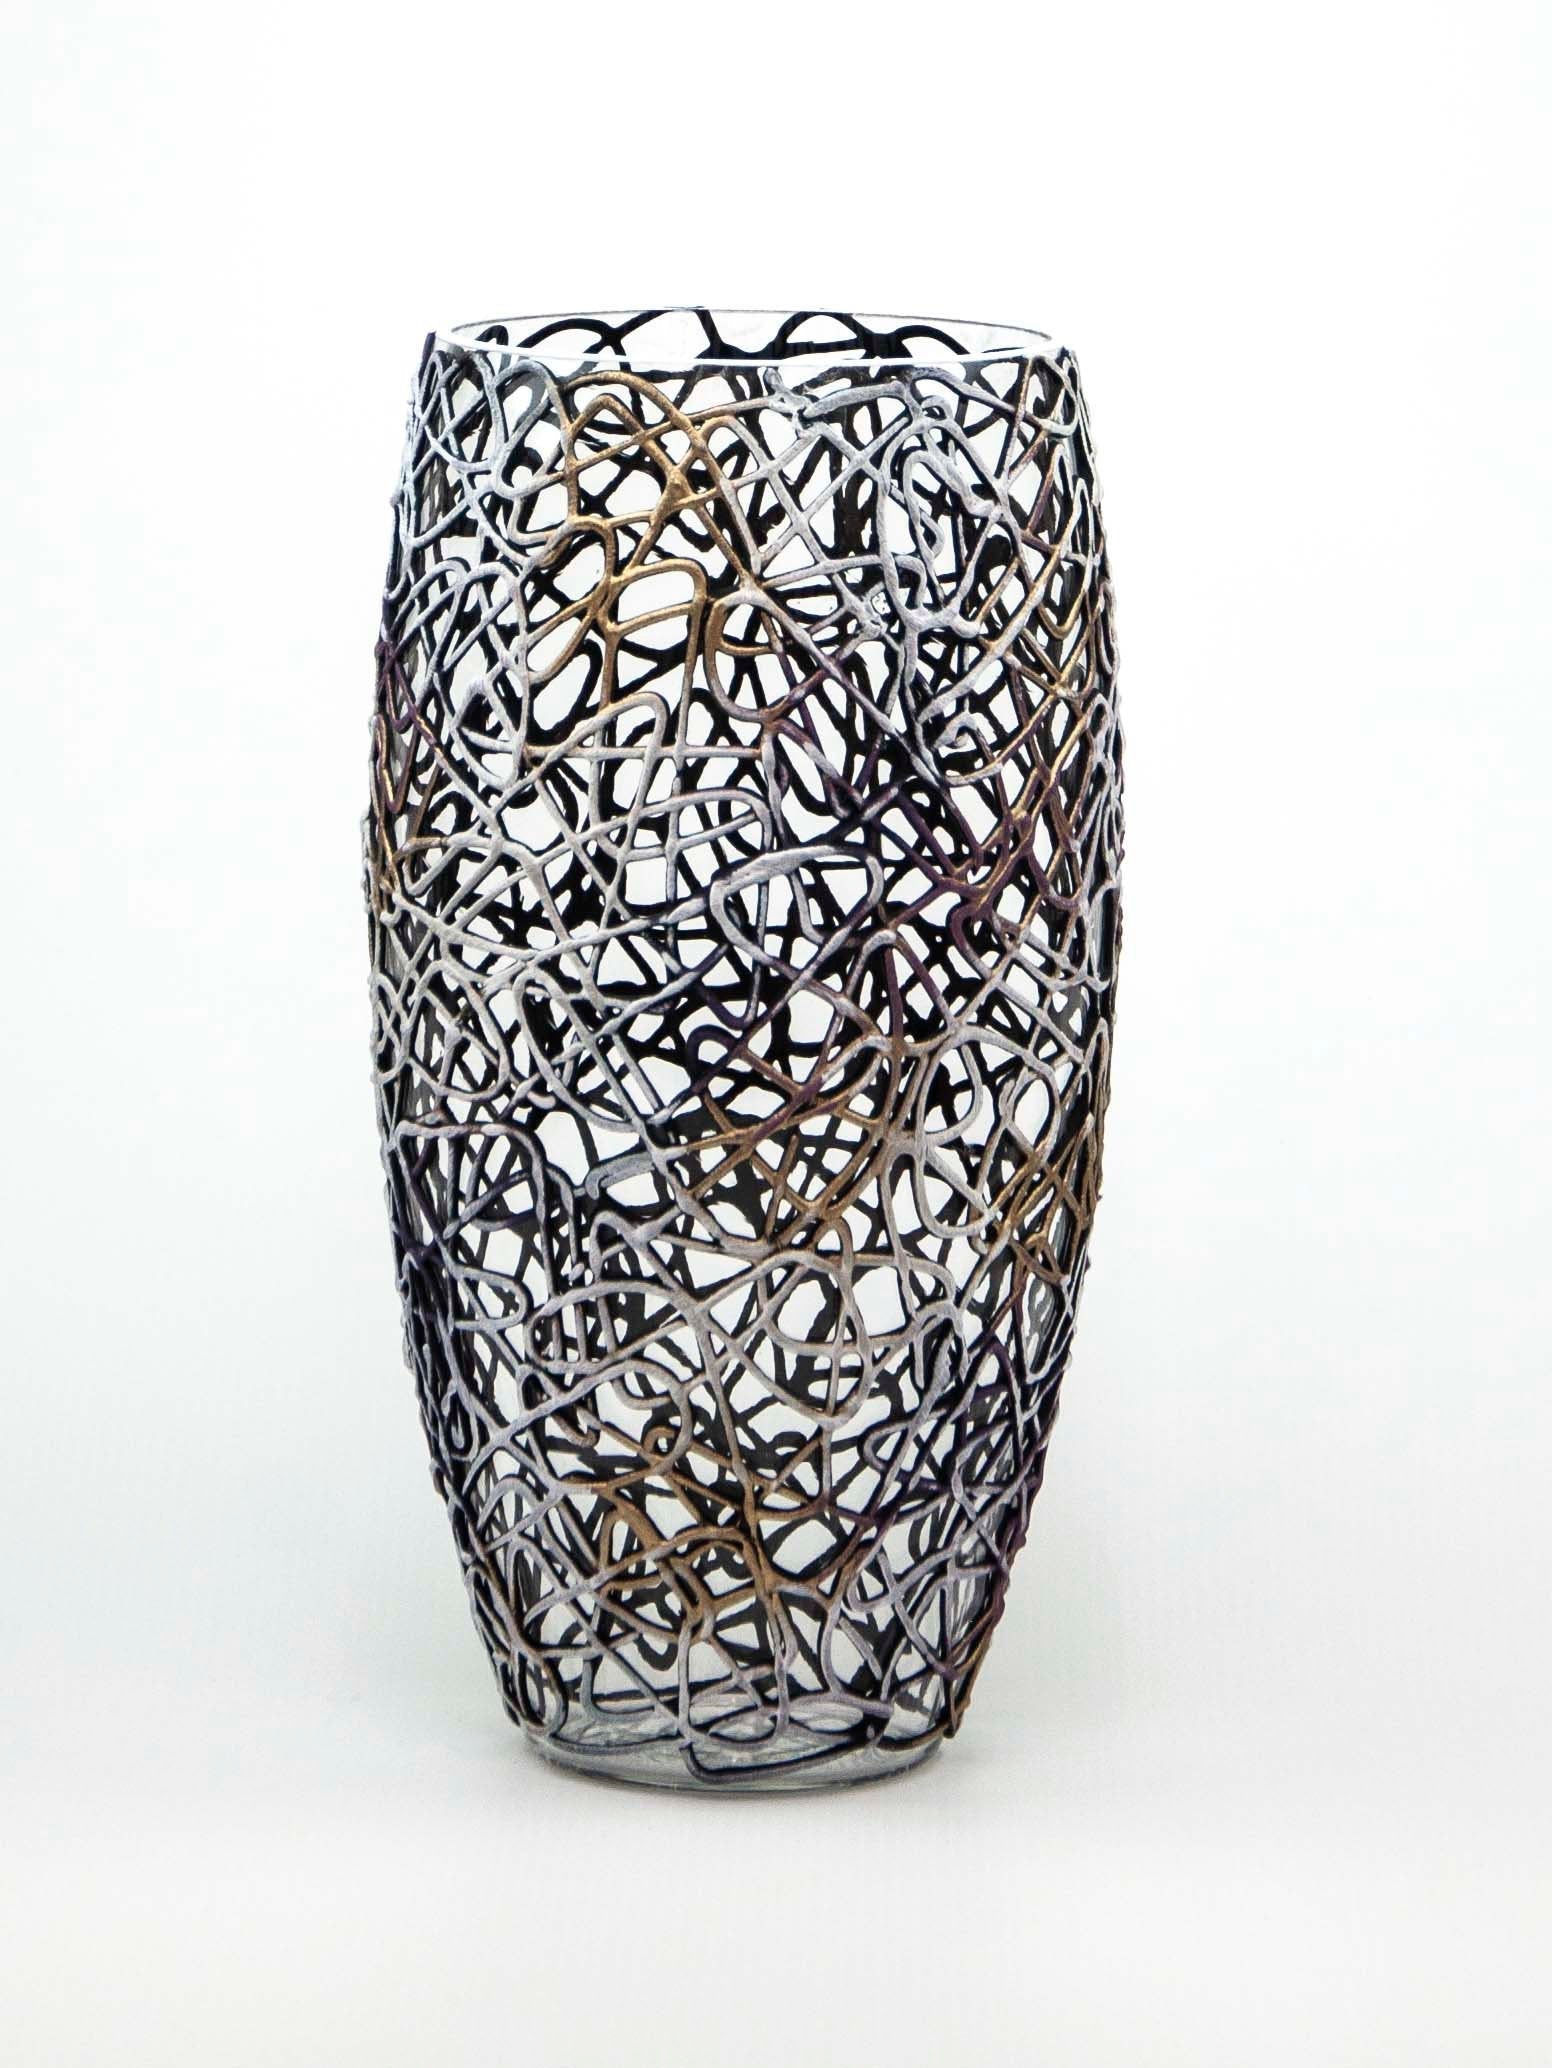 Art Decorated Glass Oval Vase | Interior Design Home Room Decor | Table vase 12 inch-1